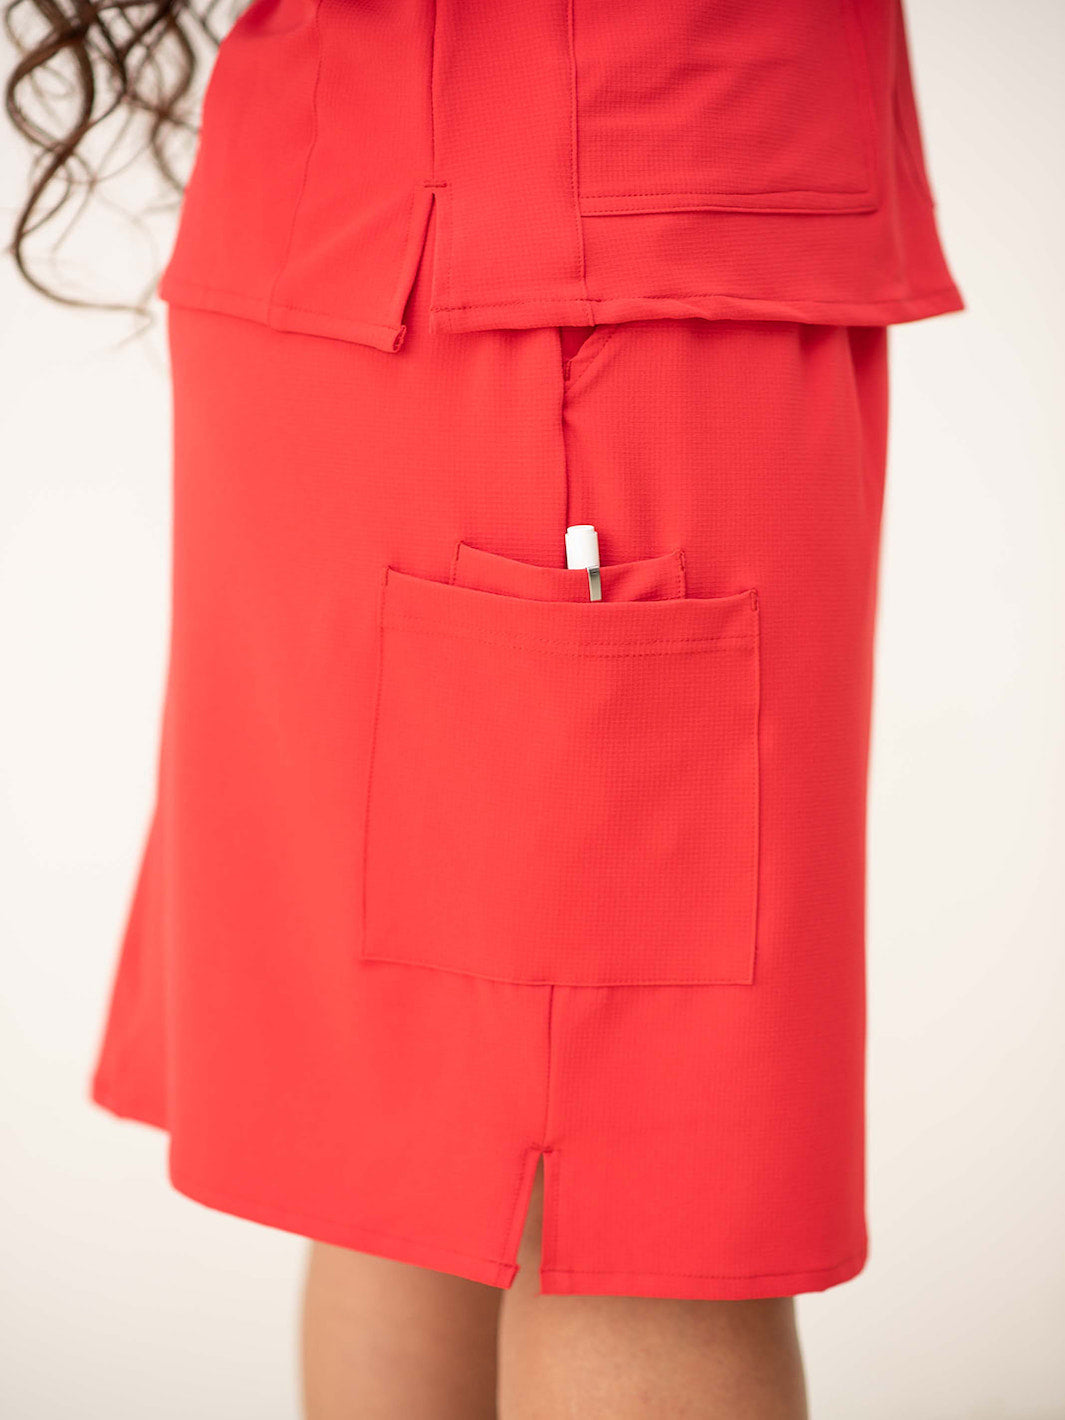 Original Scrub Skirt - Red